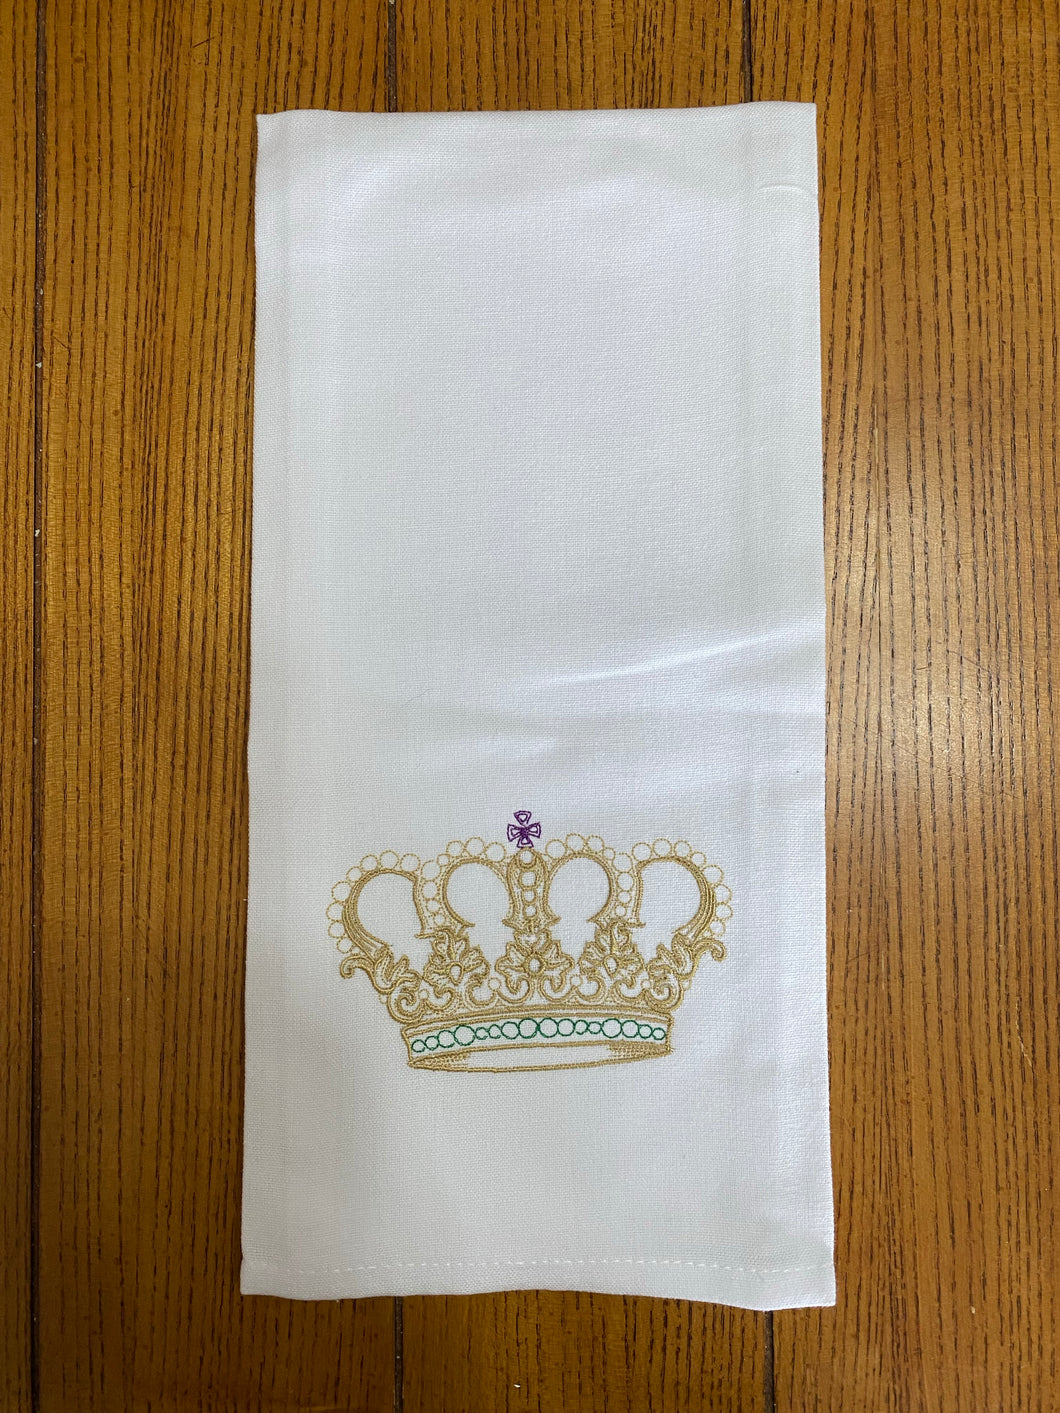 Mardi Gras Crown Towel